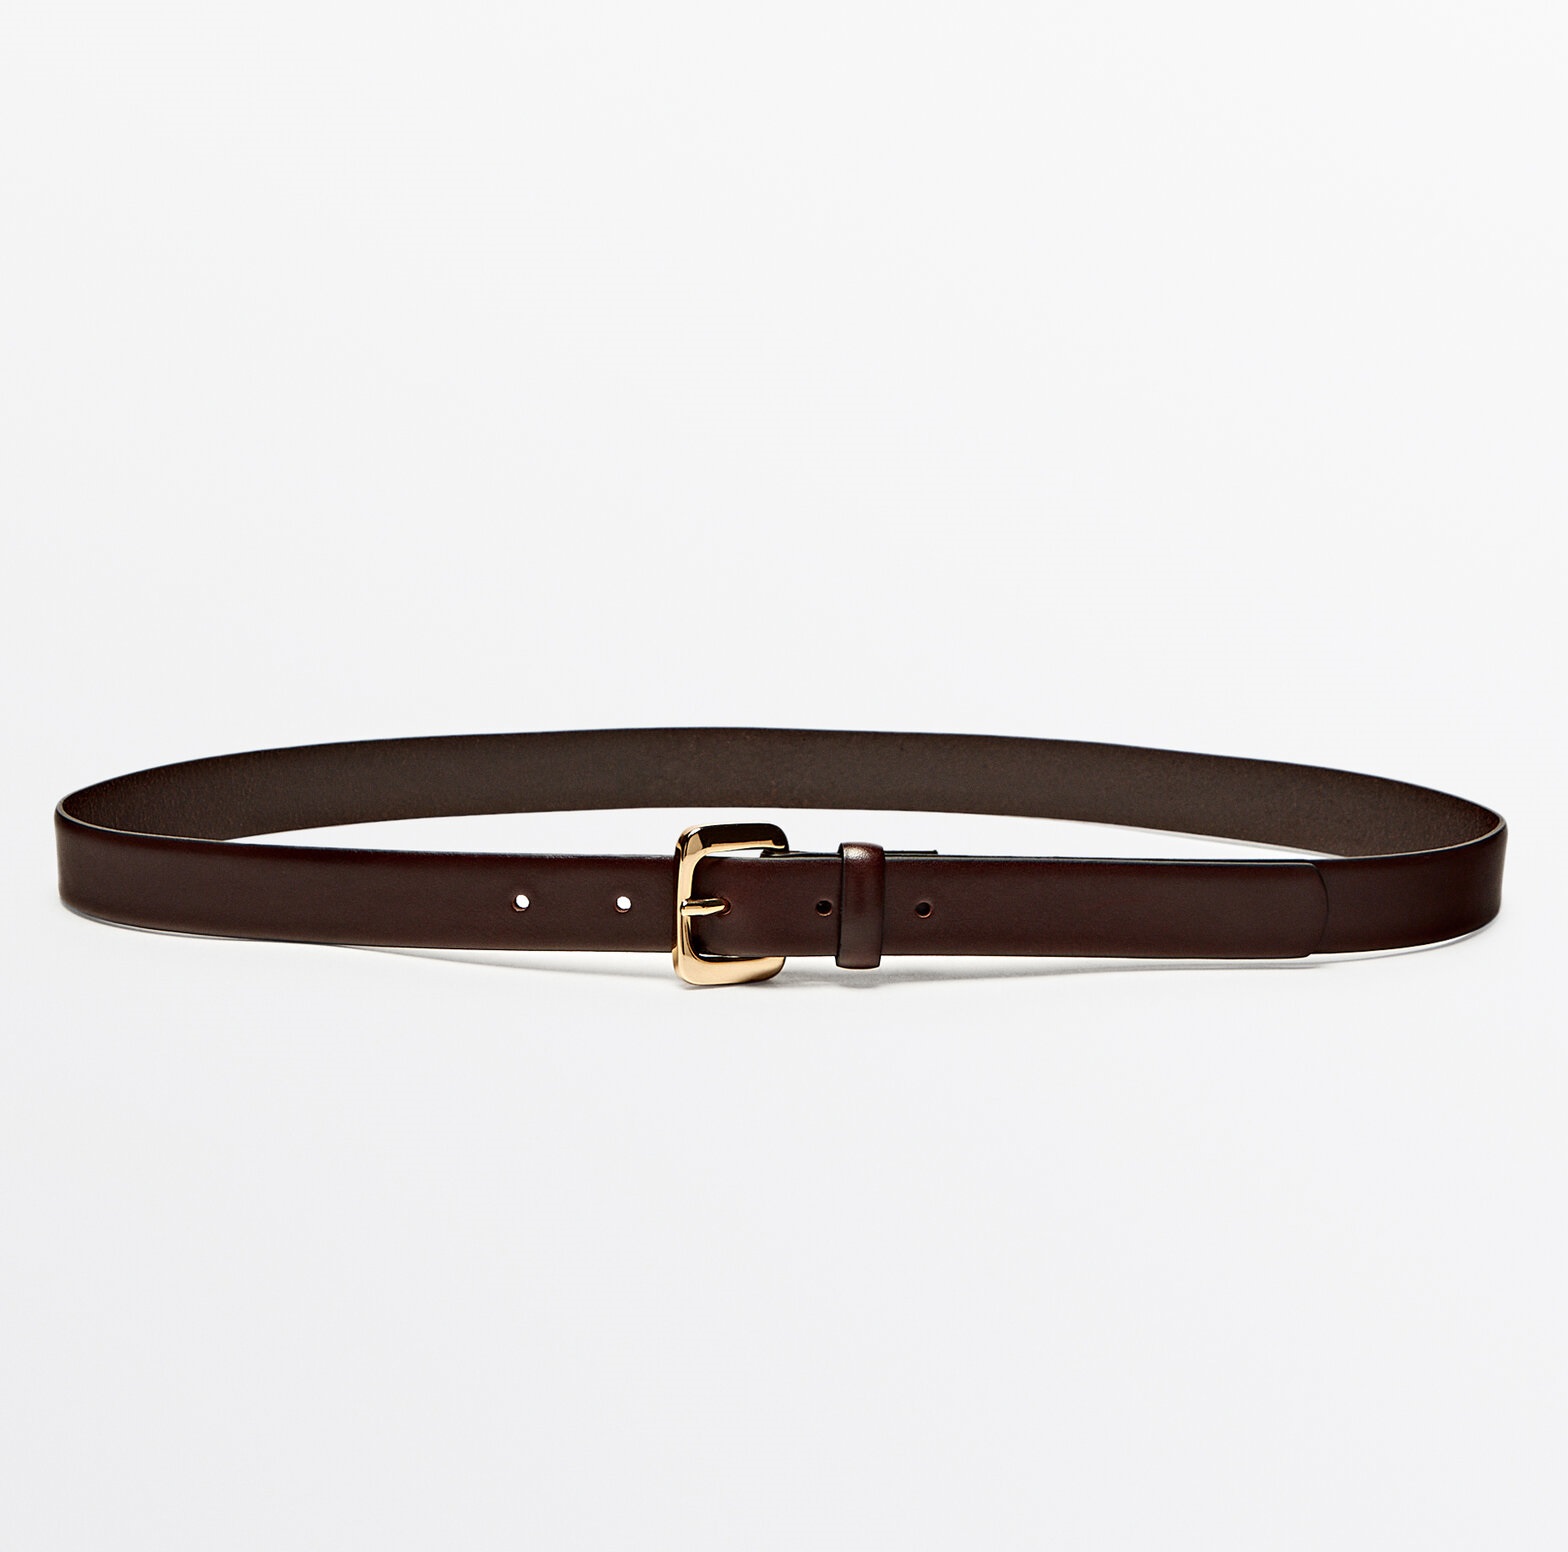 Ремень Massimo Dutti Leather With Round Buckle, коричневый ремень massimo dutti braided leather коричневый